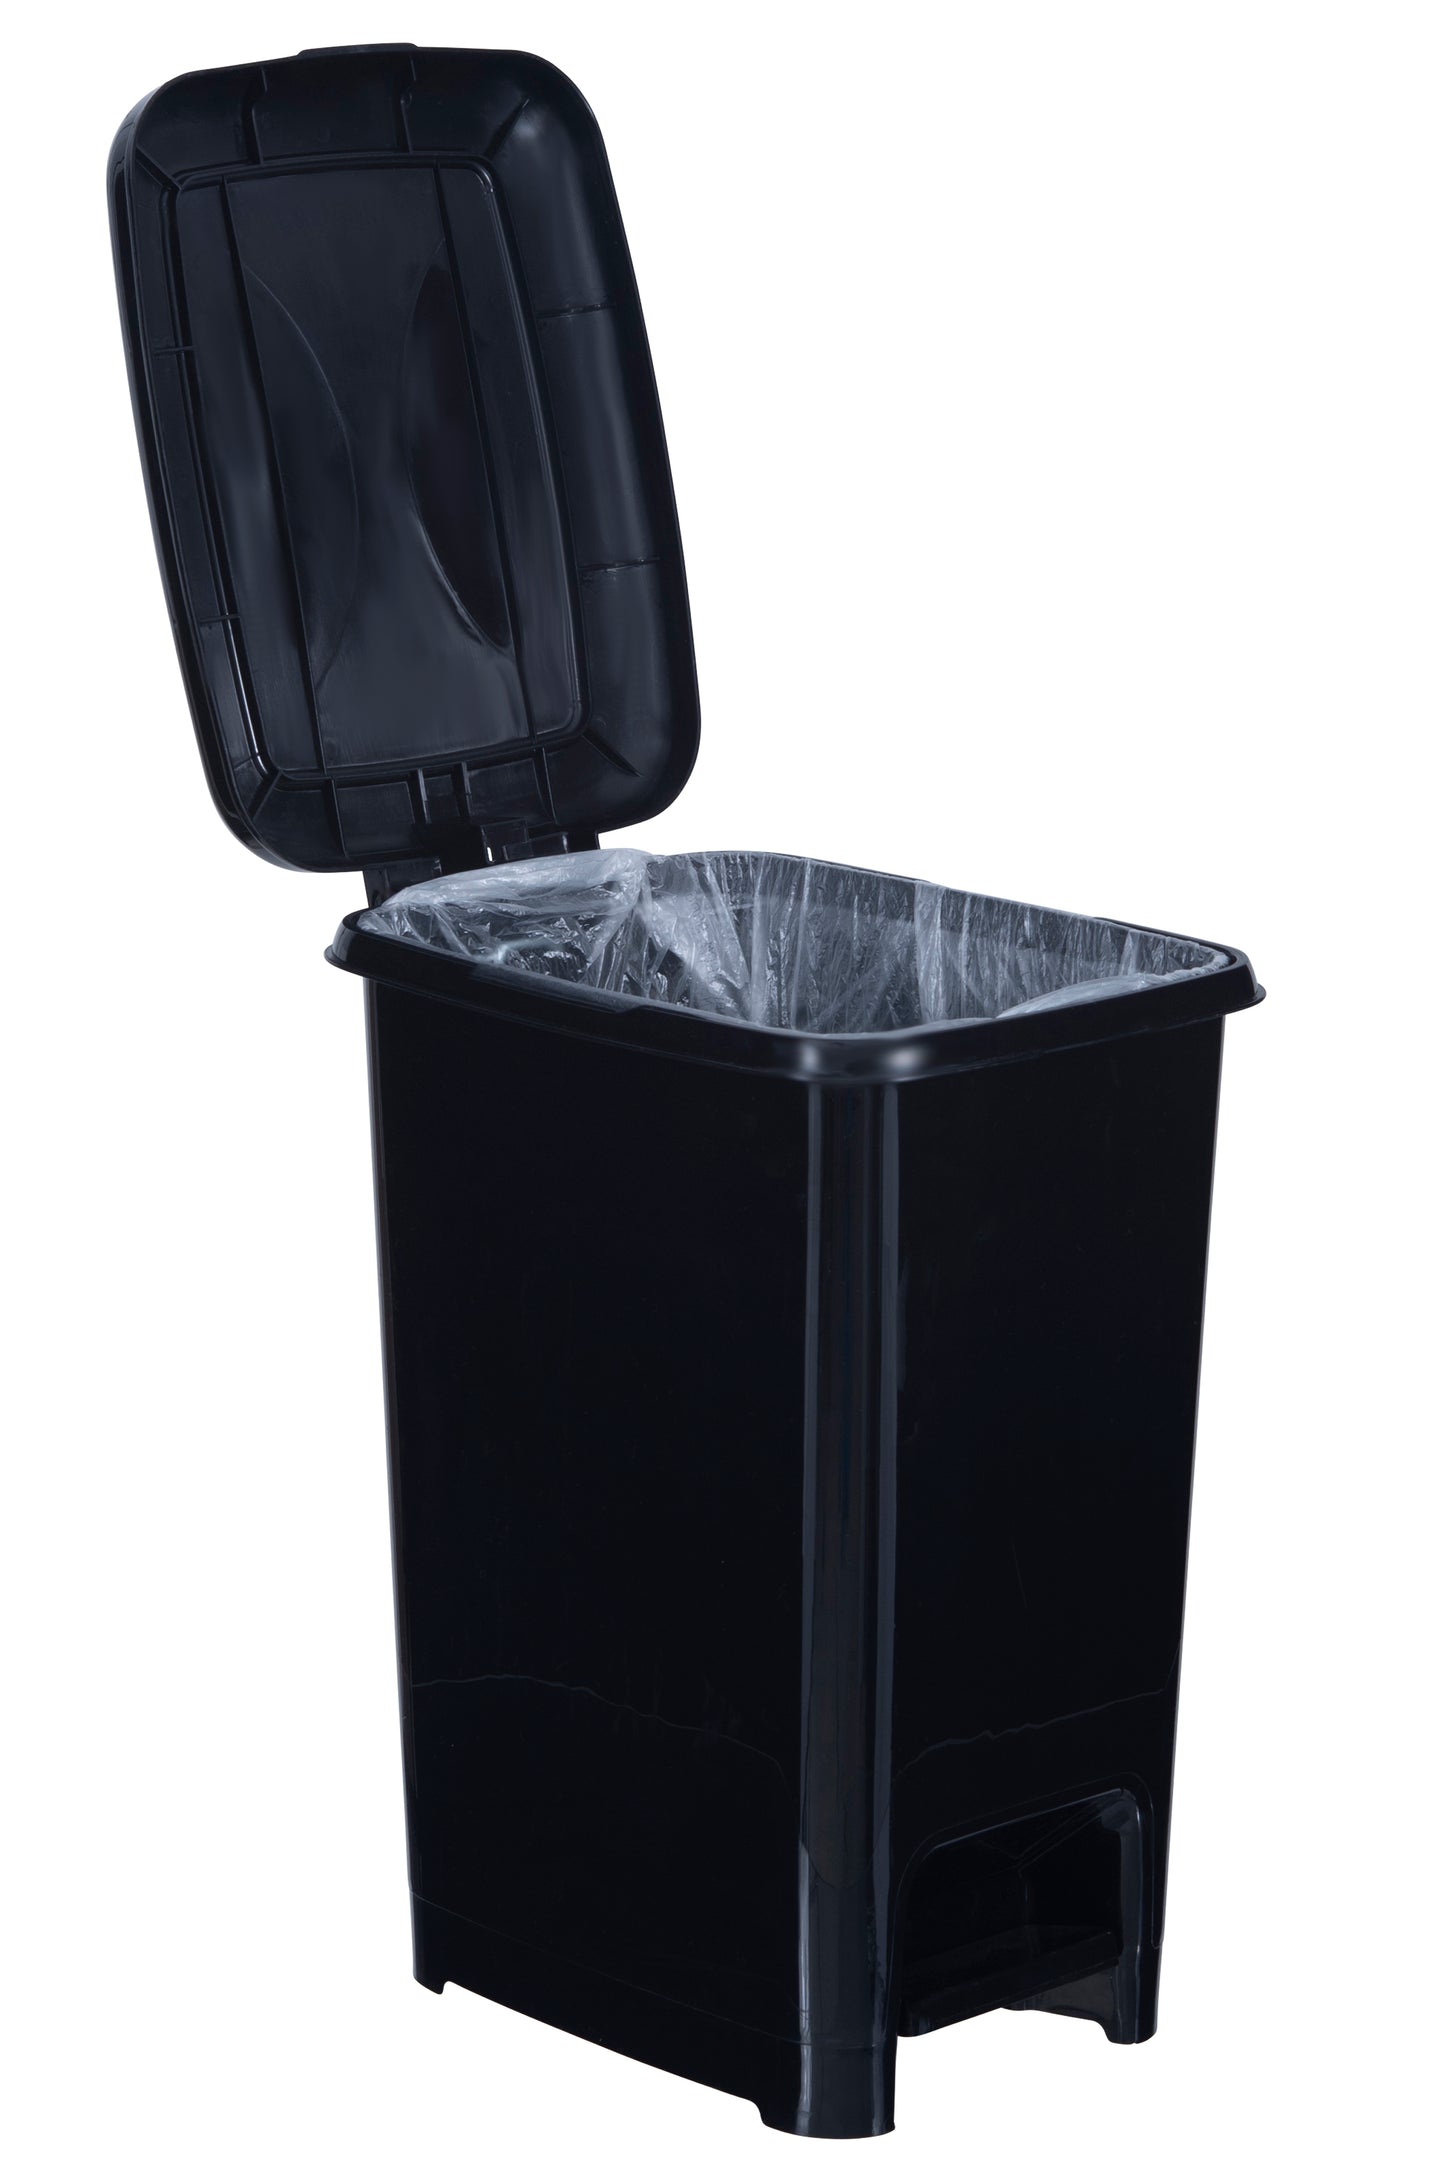 Slim Pedal Trash Can, 64 Qt - Black